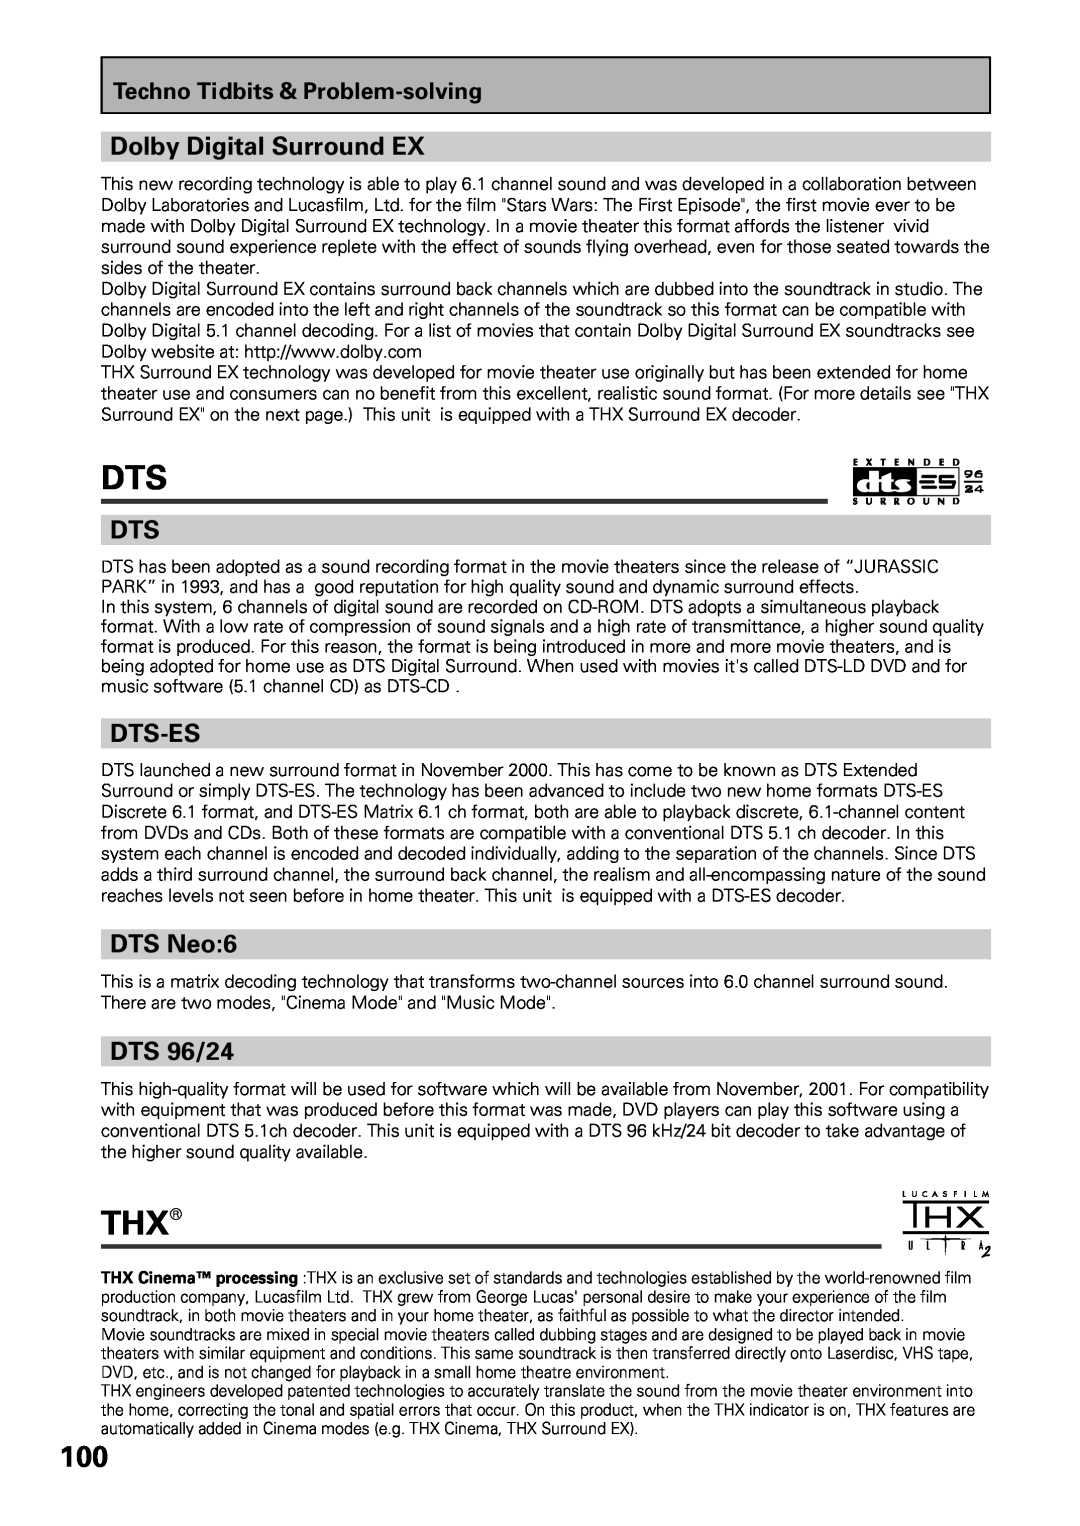 Pioneer VSX-47TX manual Thx, Dolby Digital Surround EX, Dts-Es, DTS Neo:6, DTS 96/24 